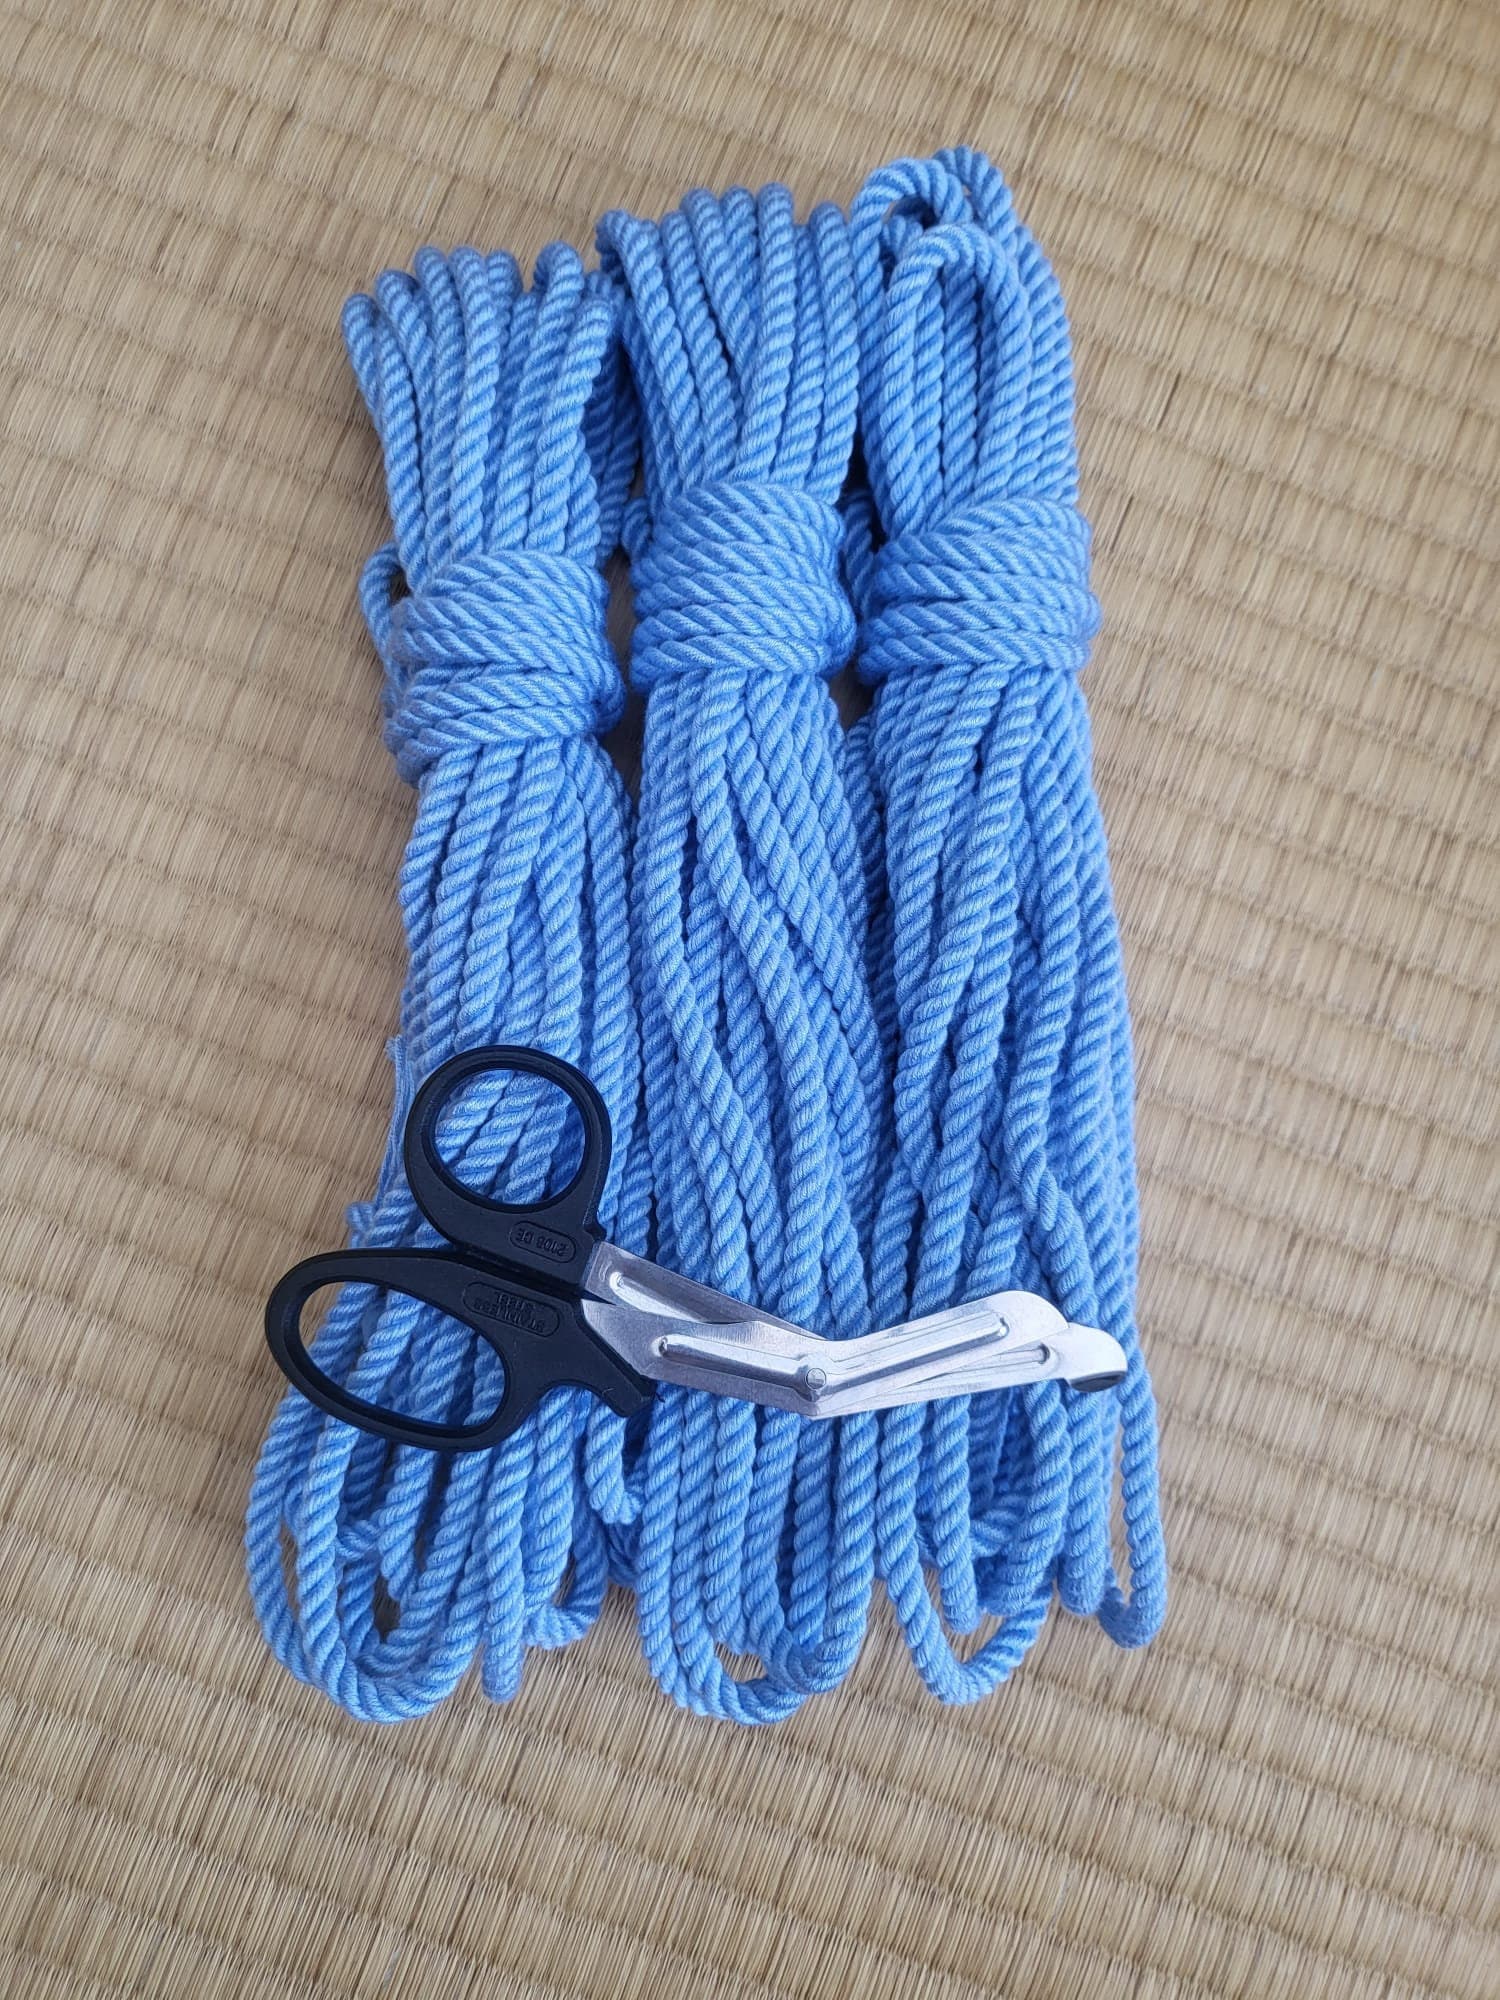 Hemp Bondage Rope Natural Shibari Rope Beginners Kit Bondage Rope